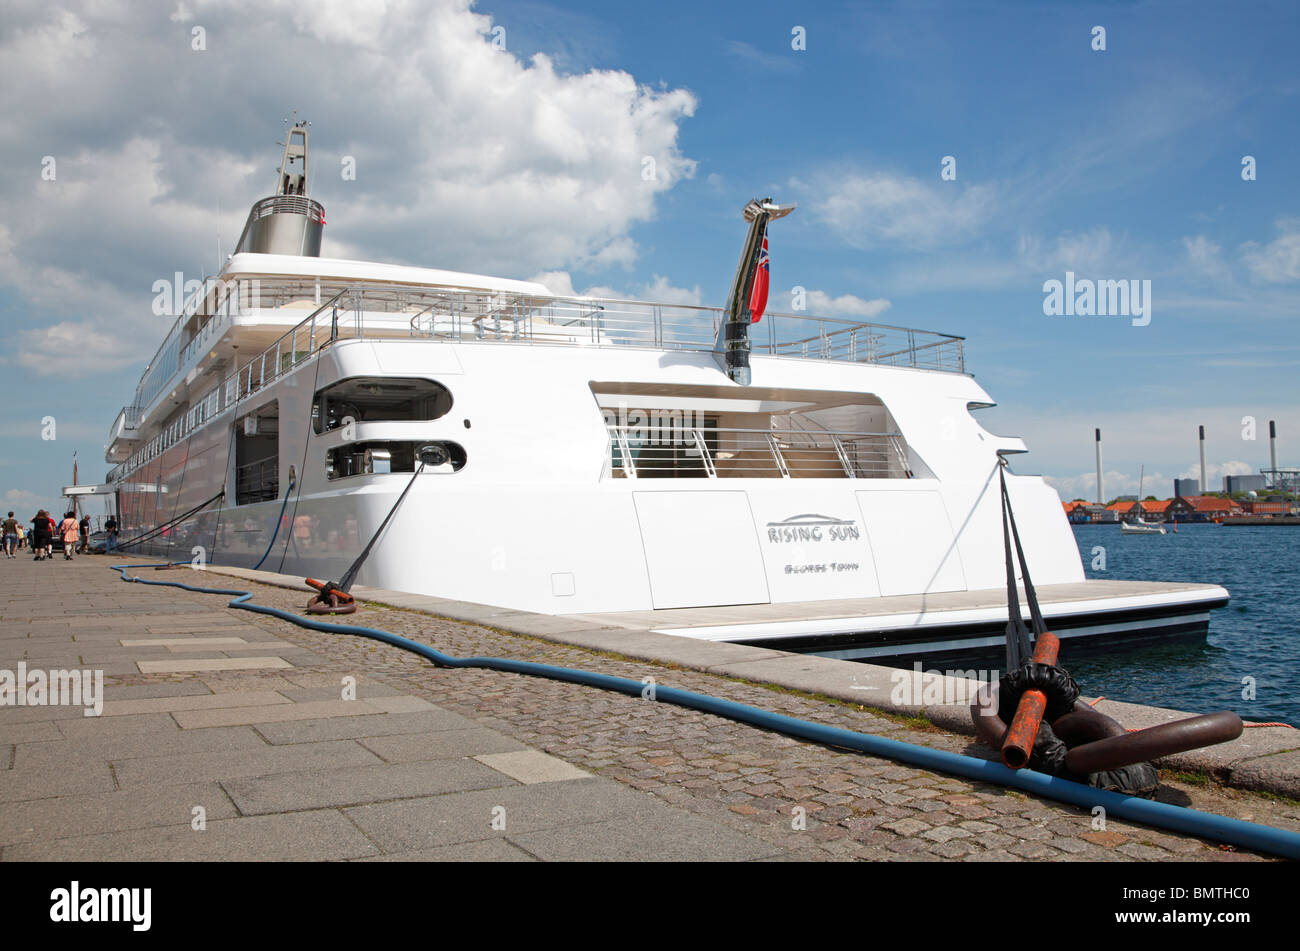 The luxury yacht The MS Rising Sun in the port of Copenhagen, Denmark Stock Photo